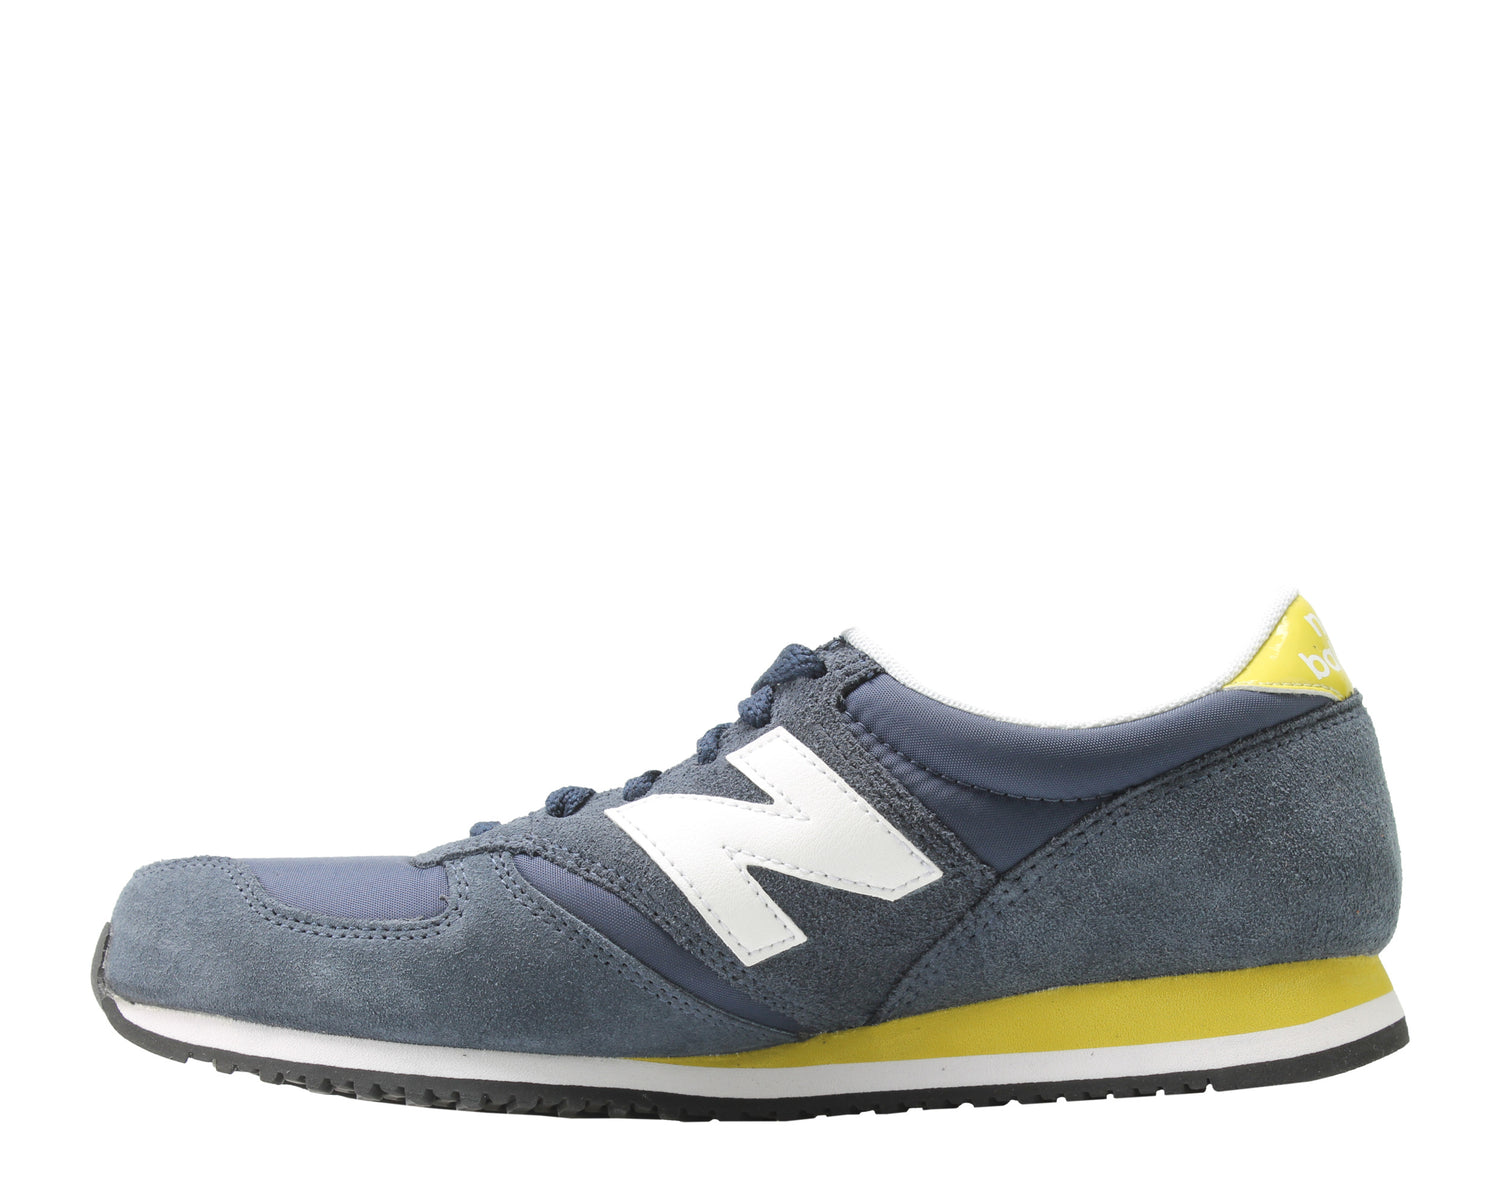 New Balance 420 Men's Running Shoes